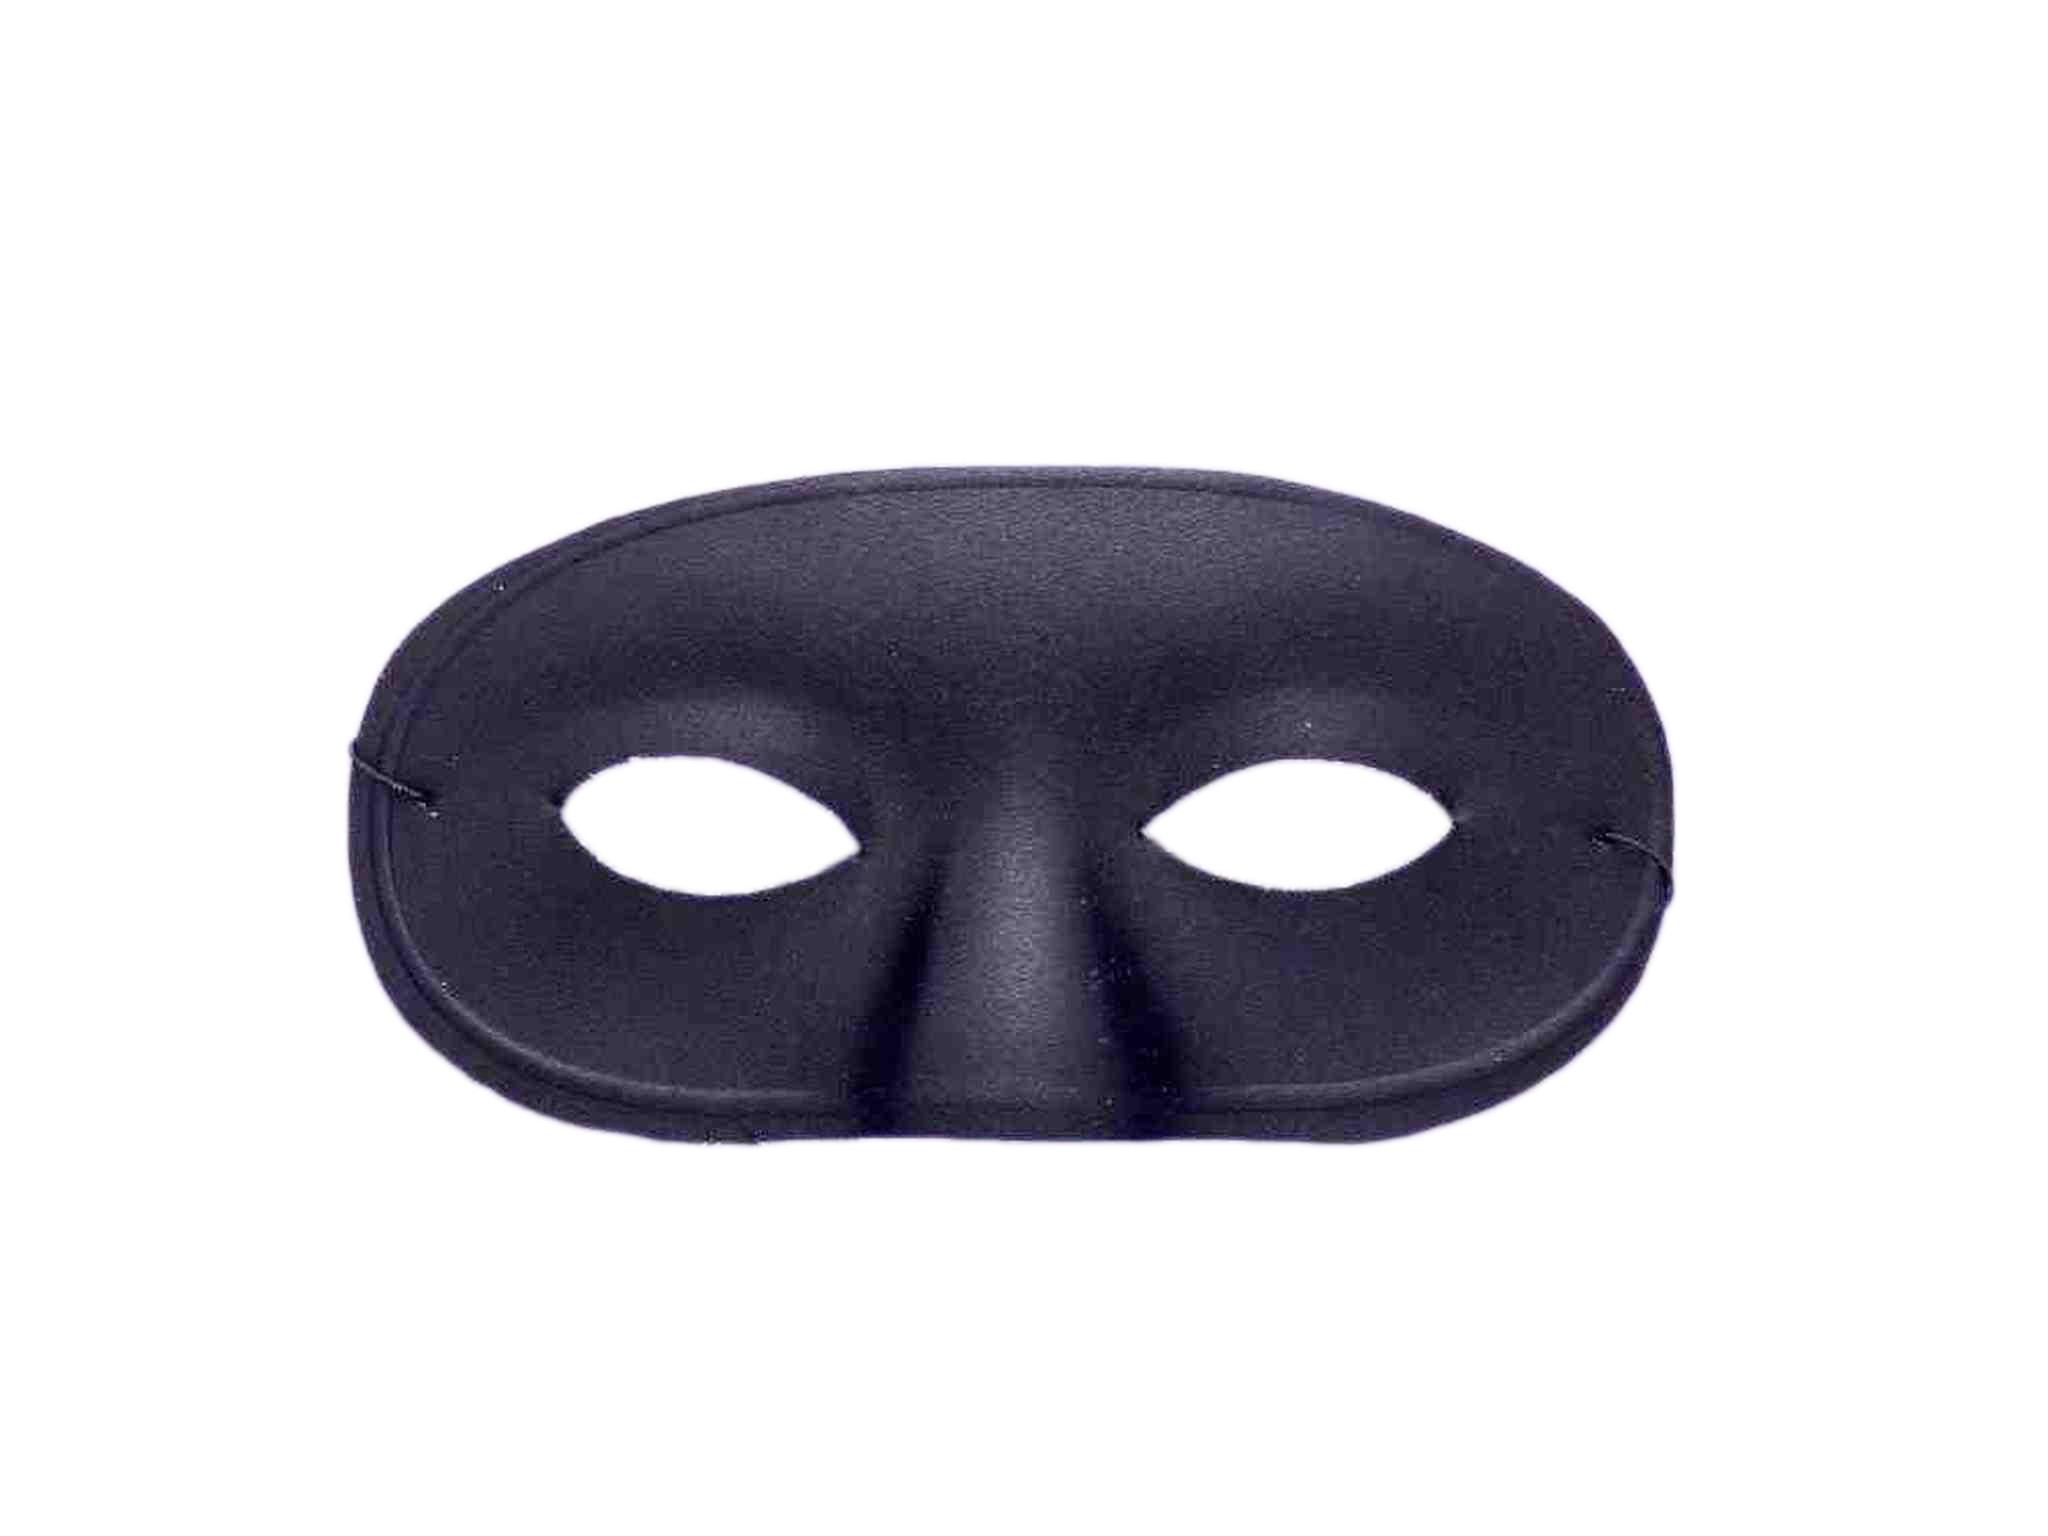 Черная маска на глаза. Маска "зорро", чёрная. Маска зорро. Маска зорро маска. Маска зорро одежда.